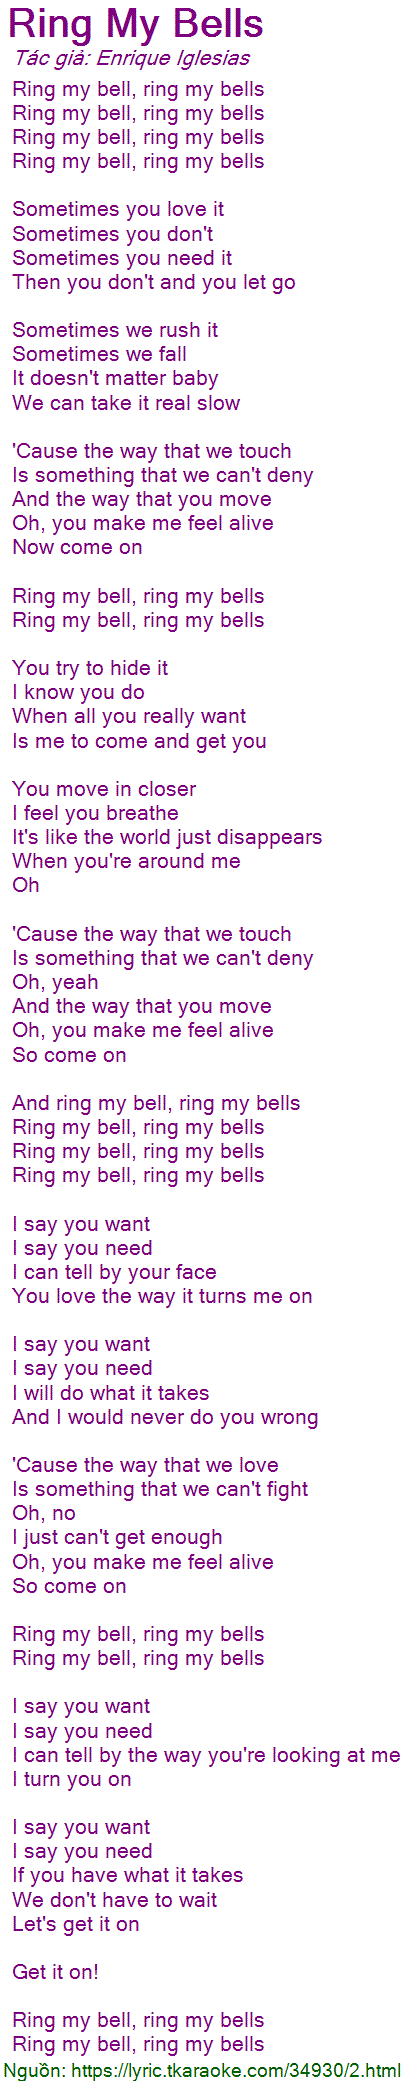 Lyrics Wallpapers: Enrique Iglesias - Ring my bells